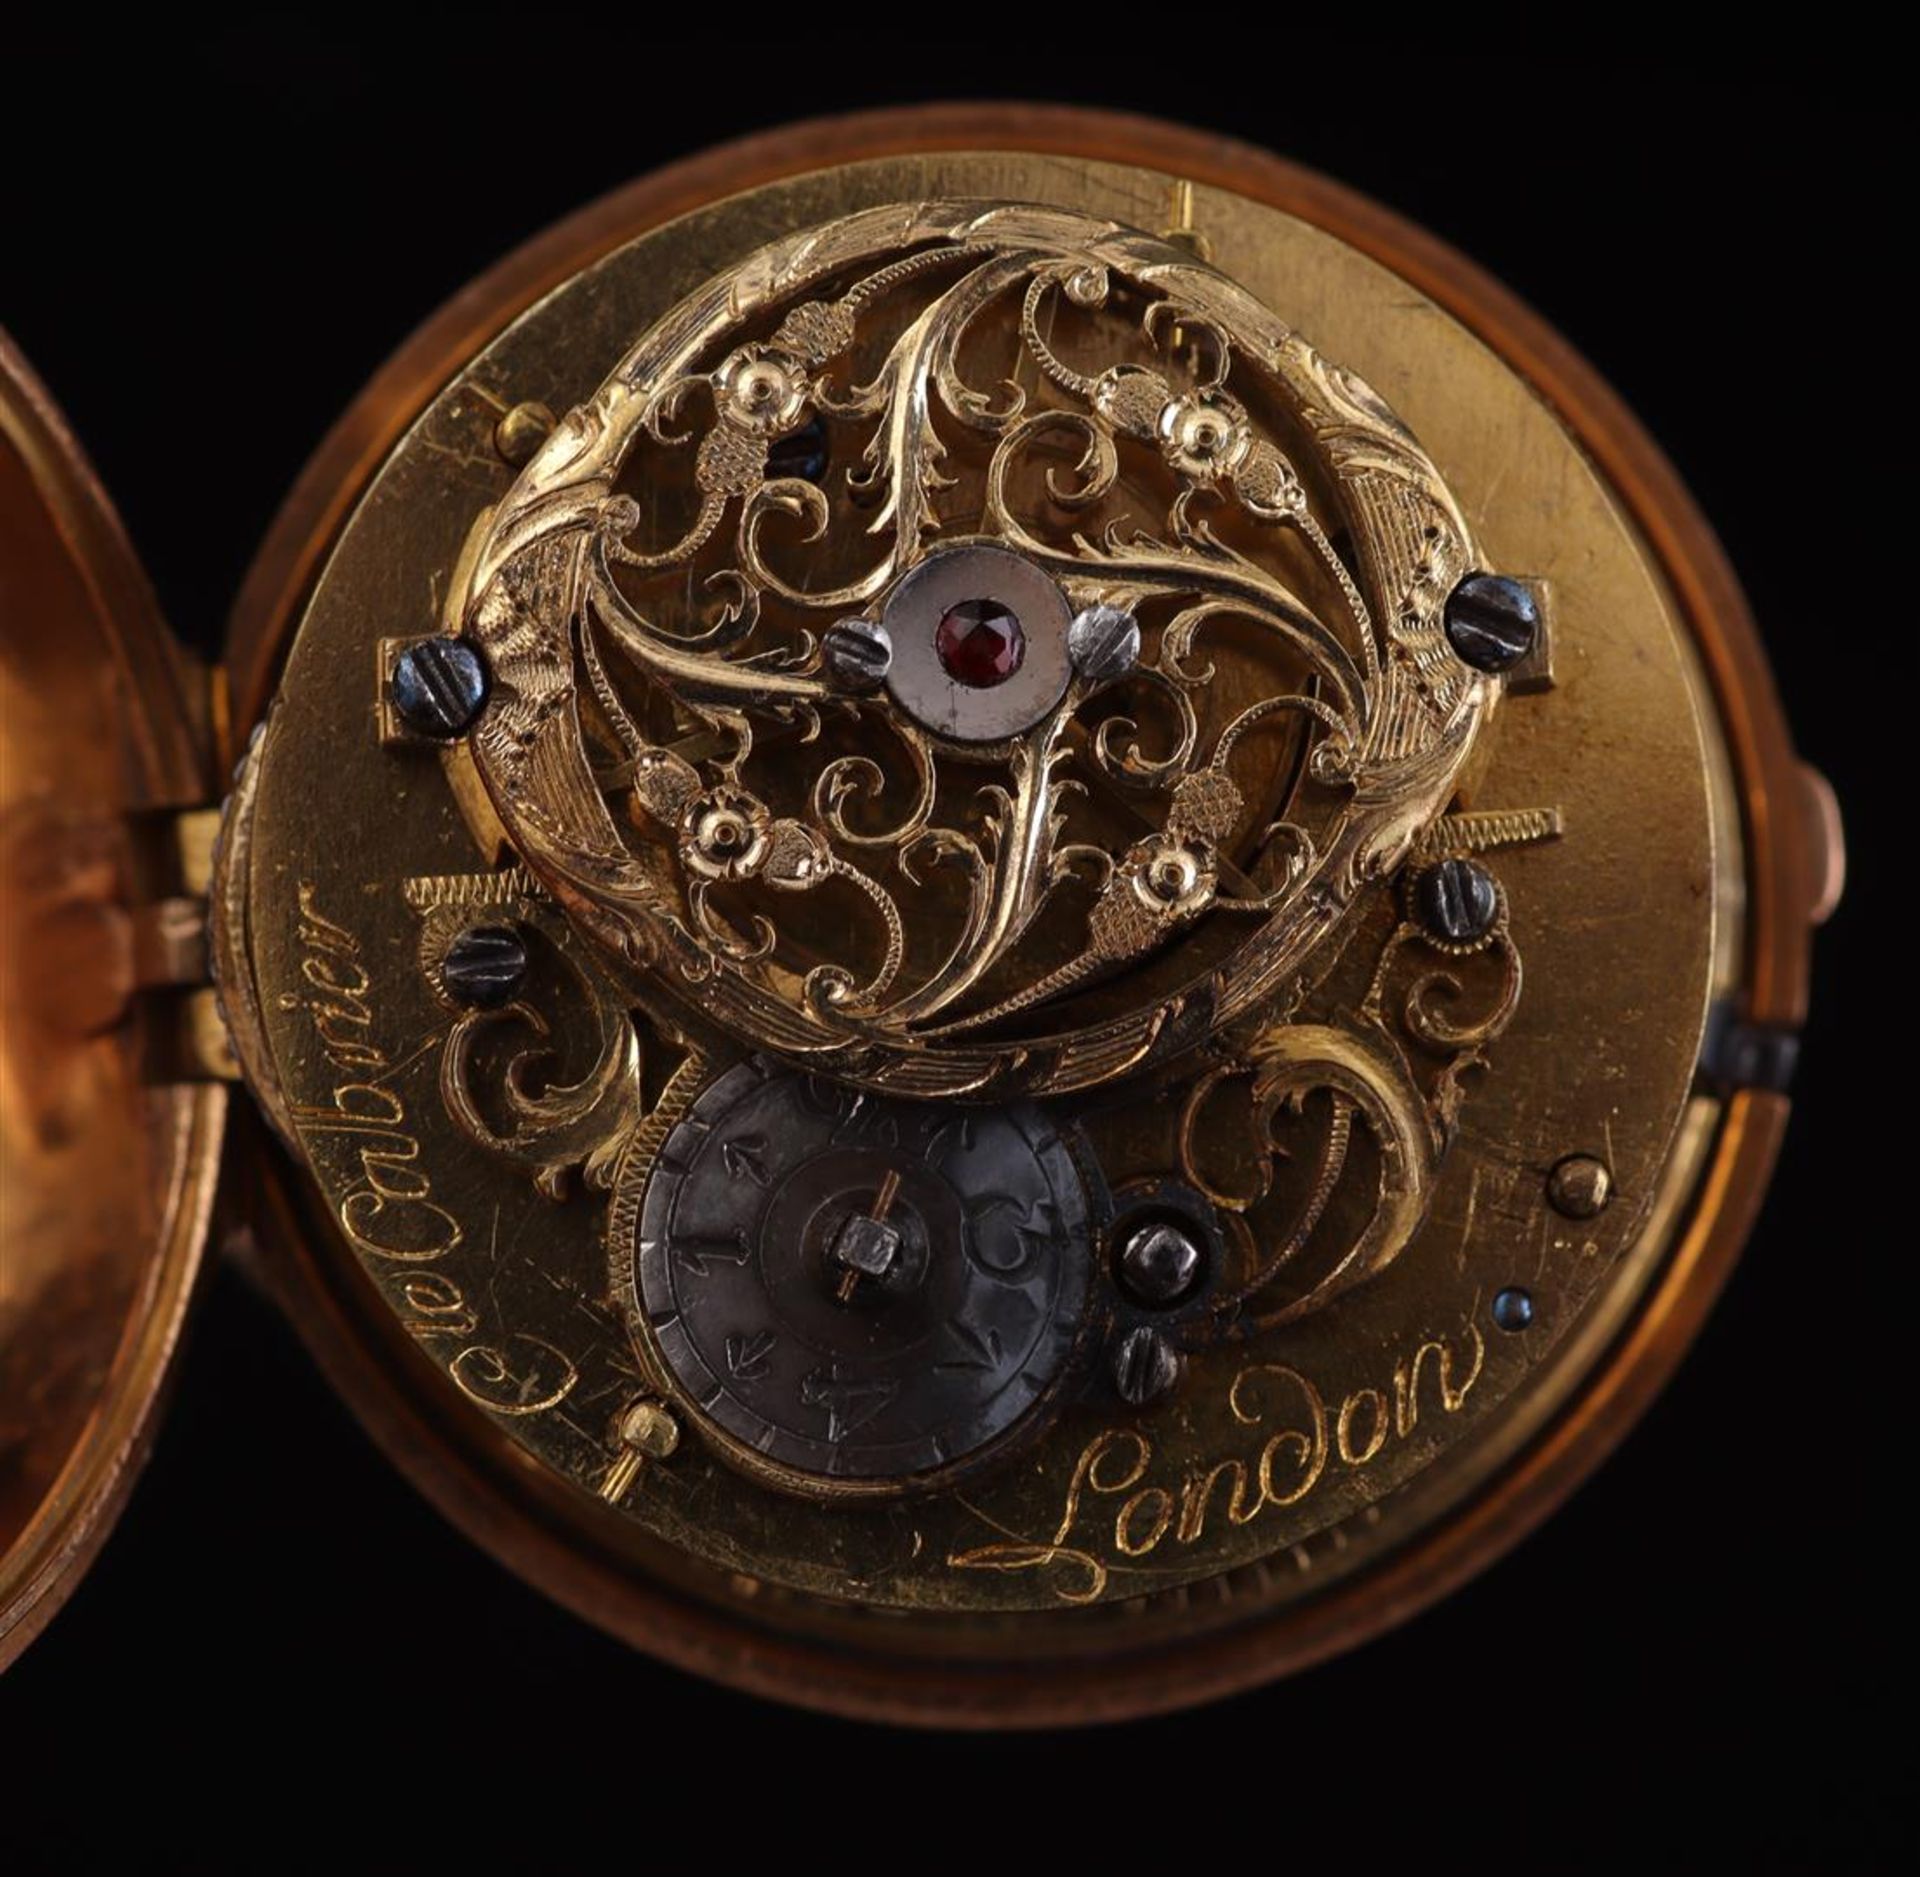 18th century pocket watch - Image 6 of 6